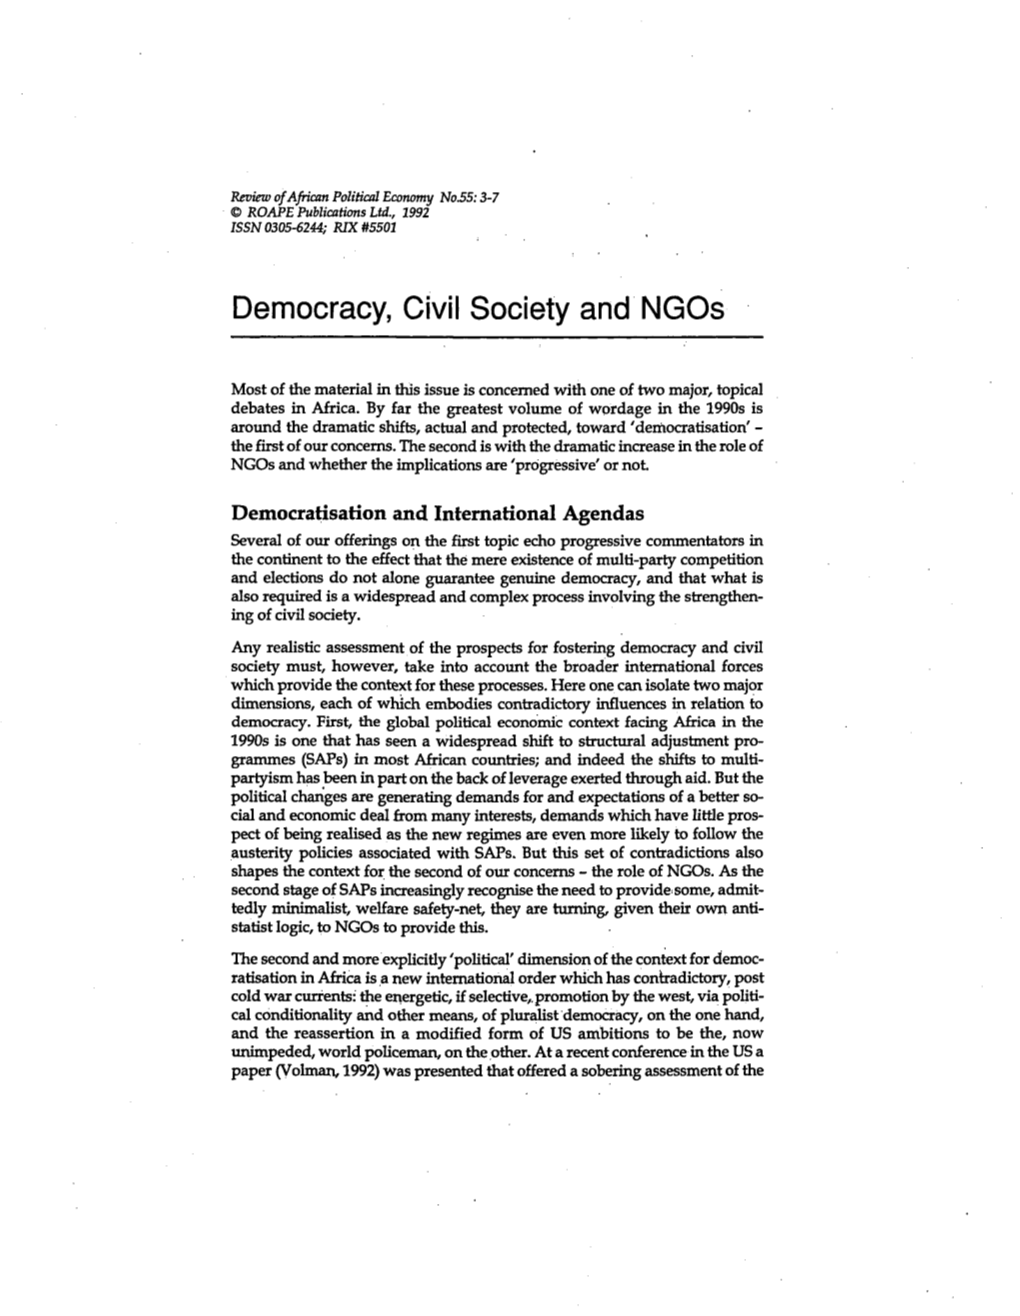 Democracy, Civil Society and Ngos